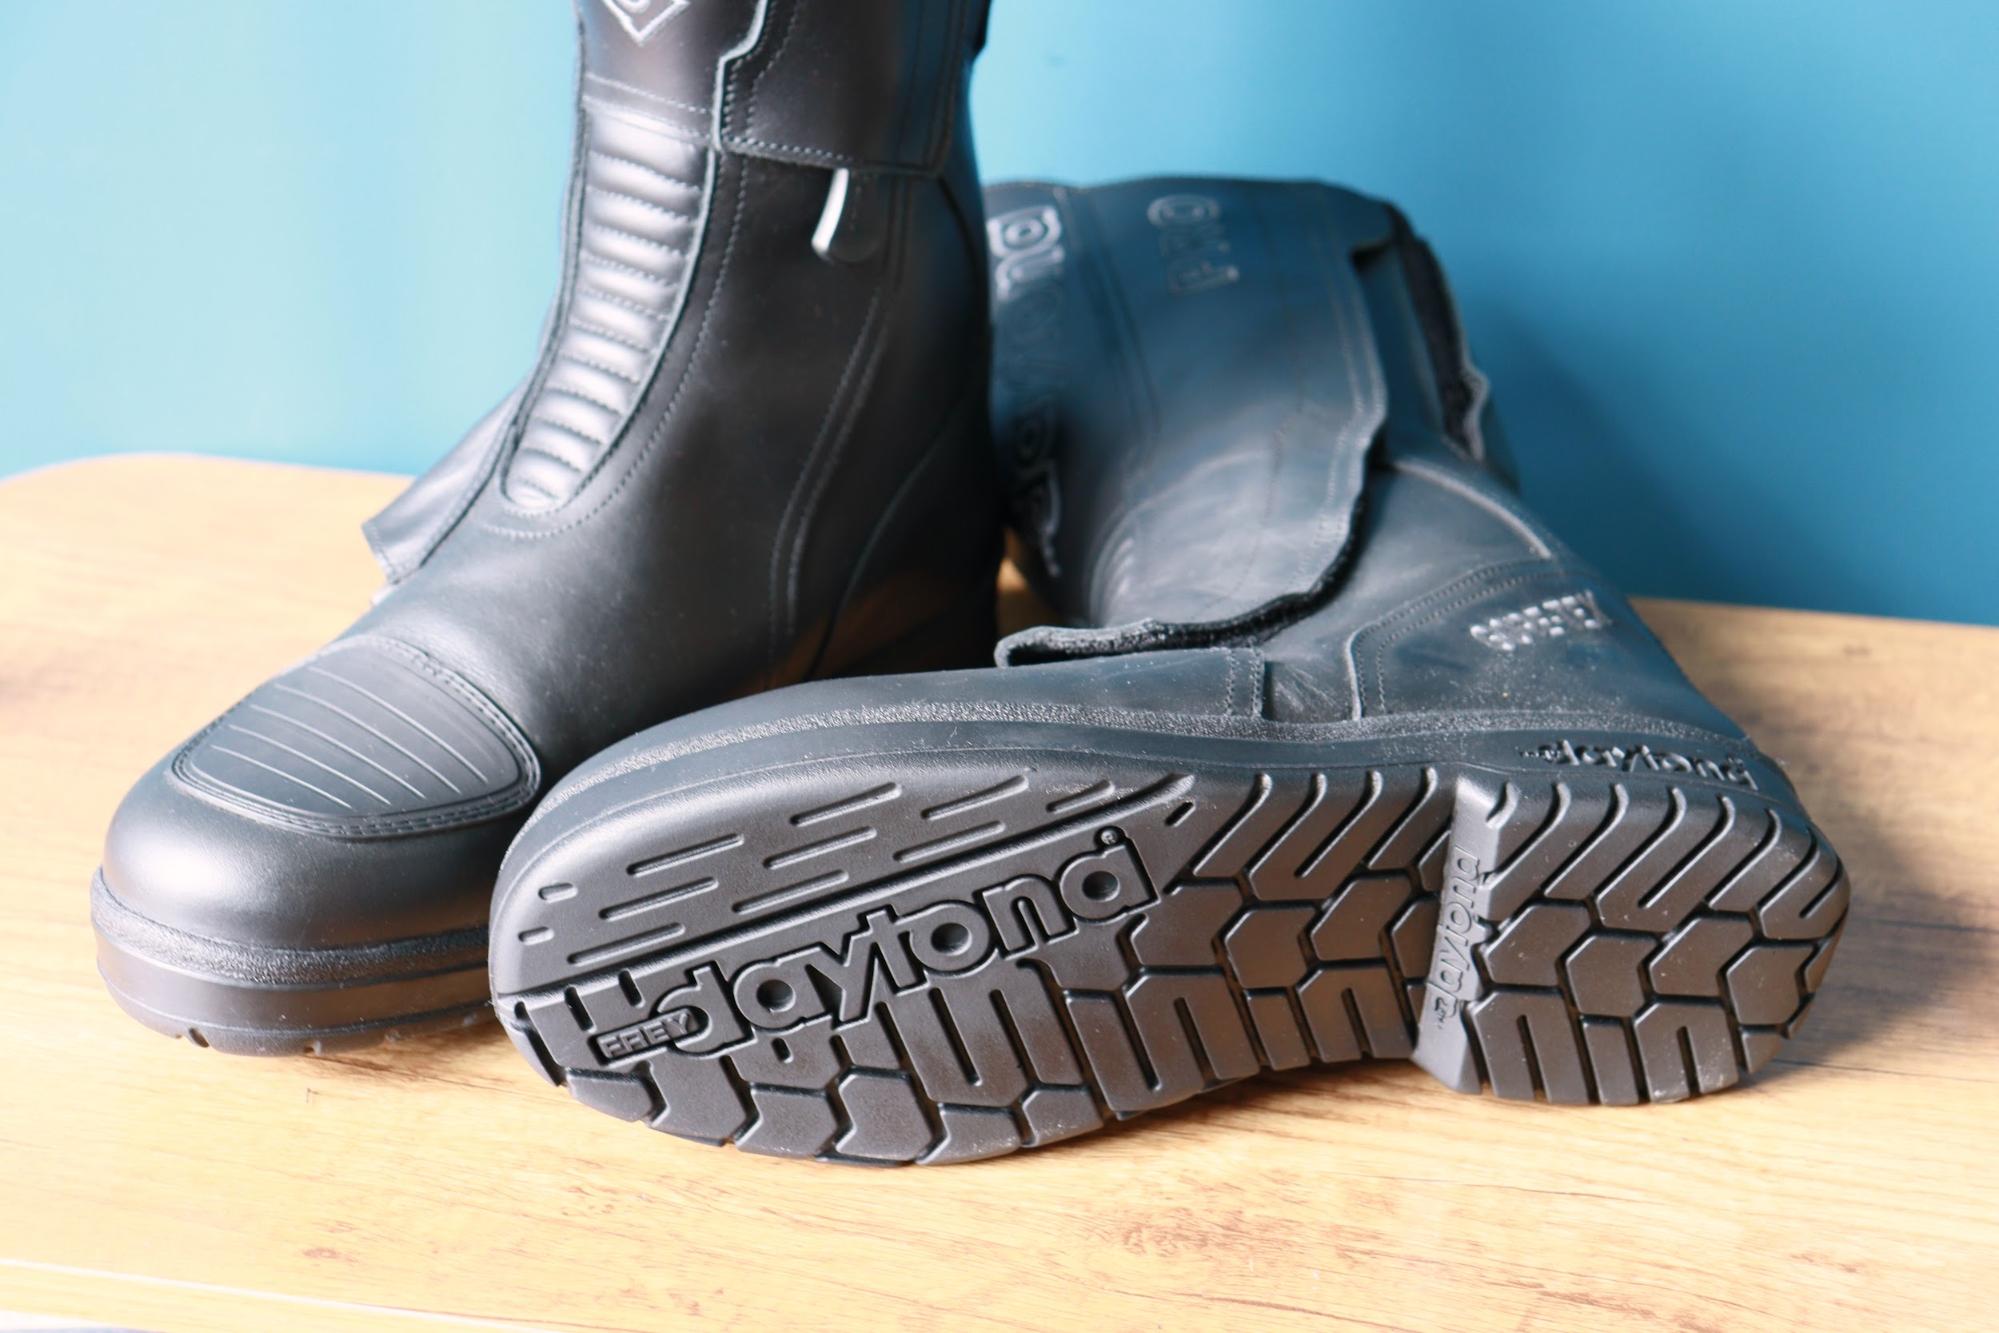 Brand new Daytona Travel Star Pro GTX boots